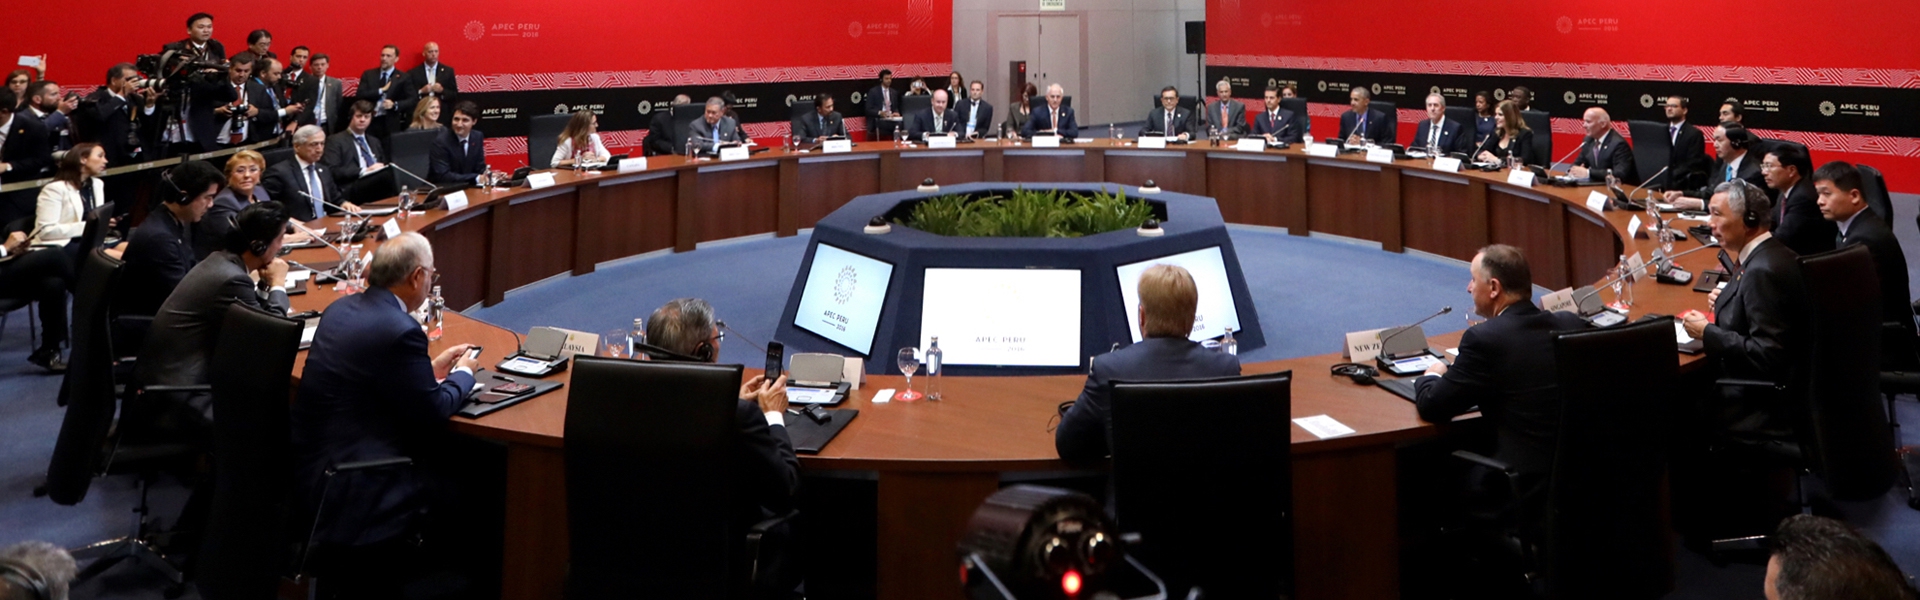 Prime Minister Justin Trudeau attends the APEC Leaders’ Meeting in Lima, Peru